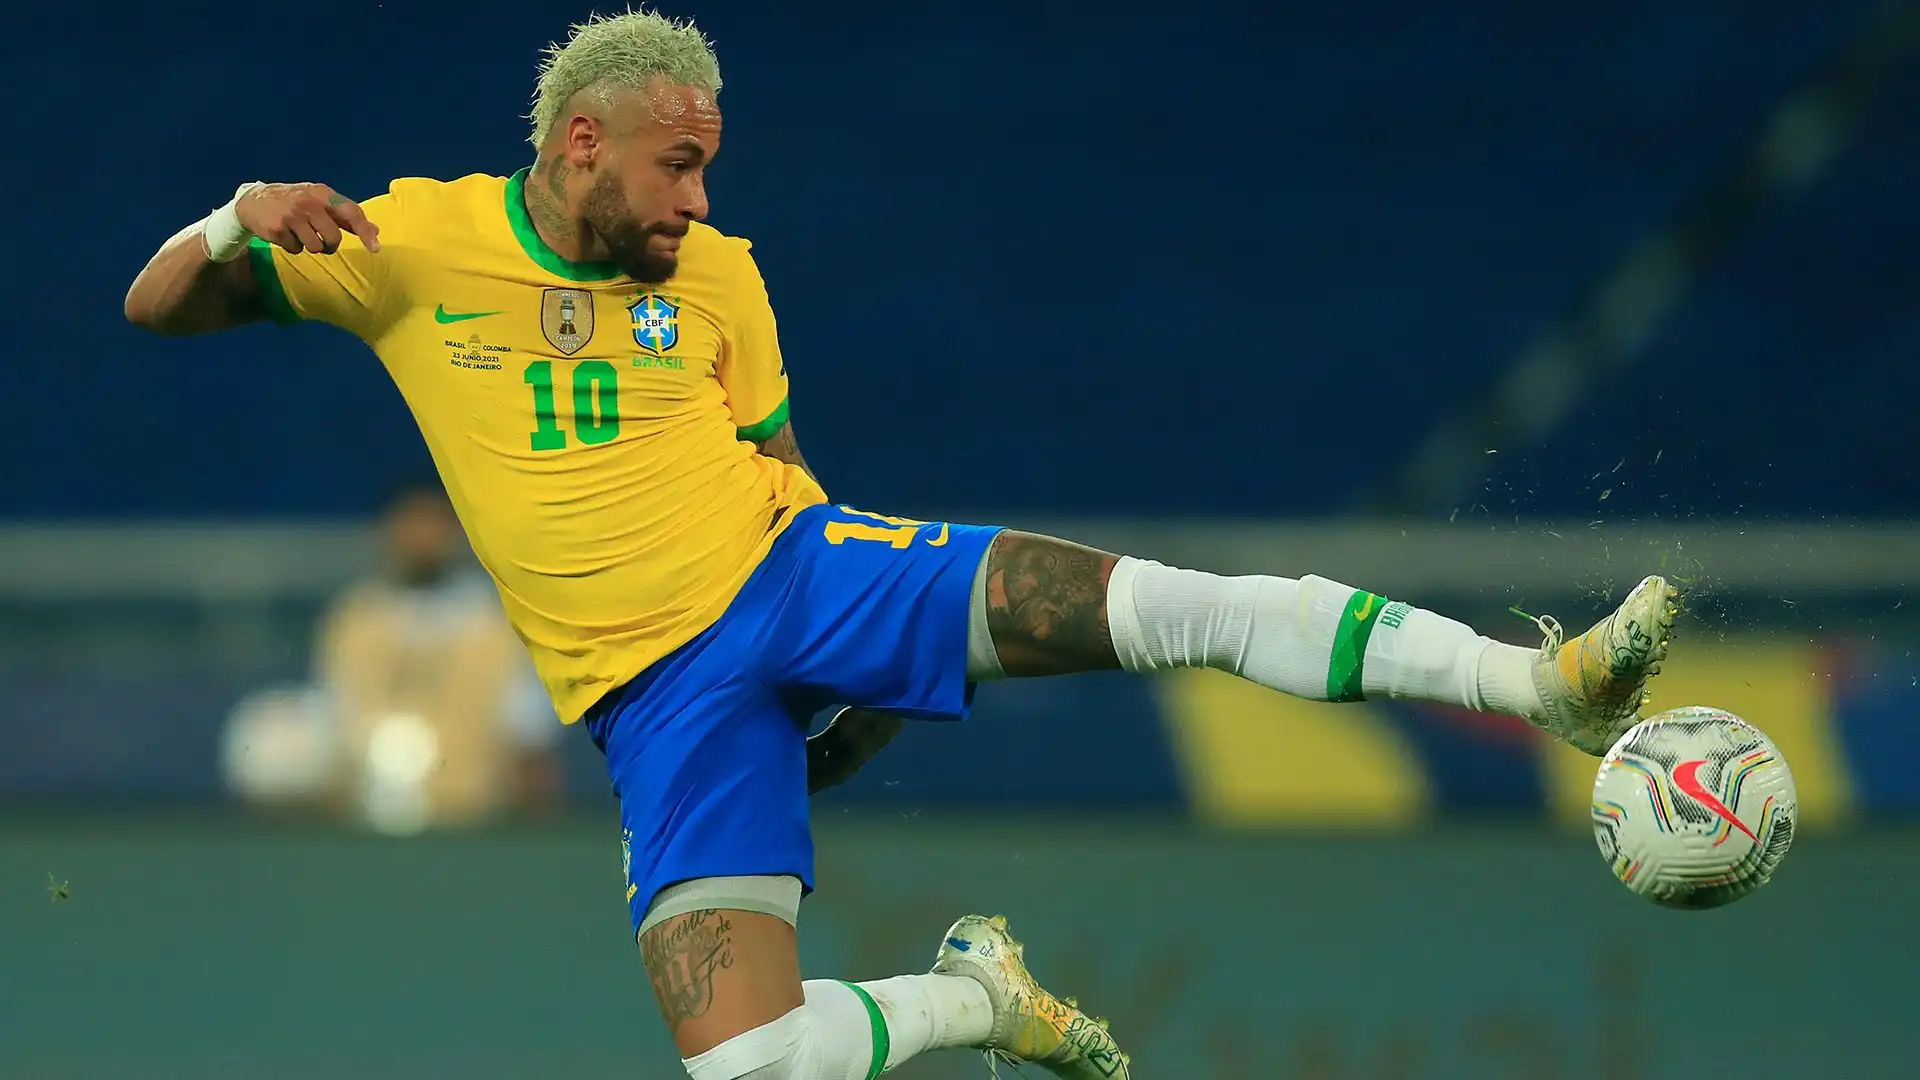 5- Quanti Palloni d'Oro ha vinto Neymar?
A- 0
B- 1
C- 3